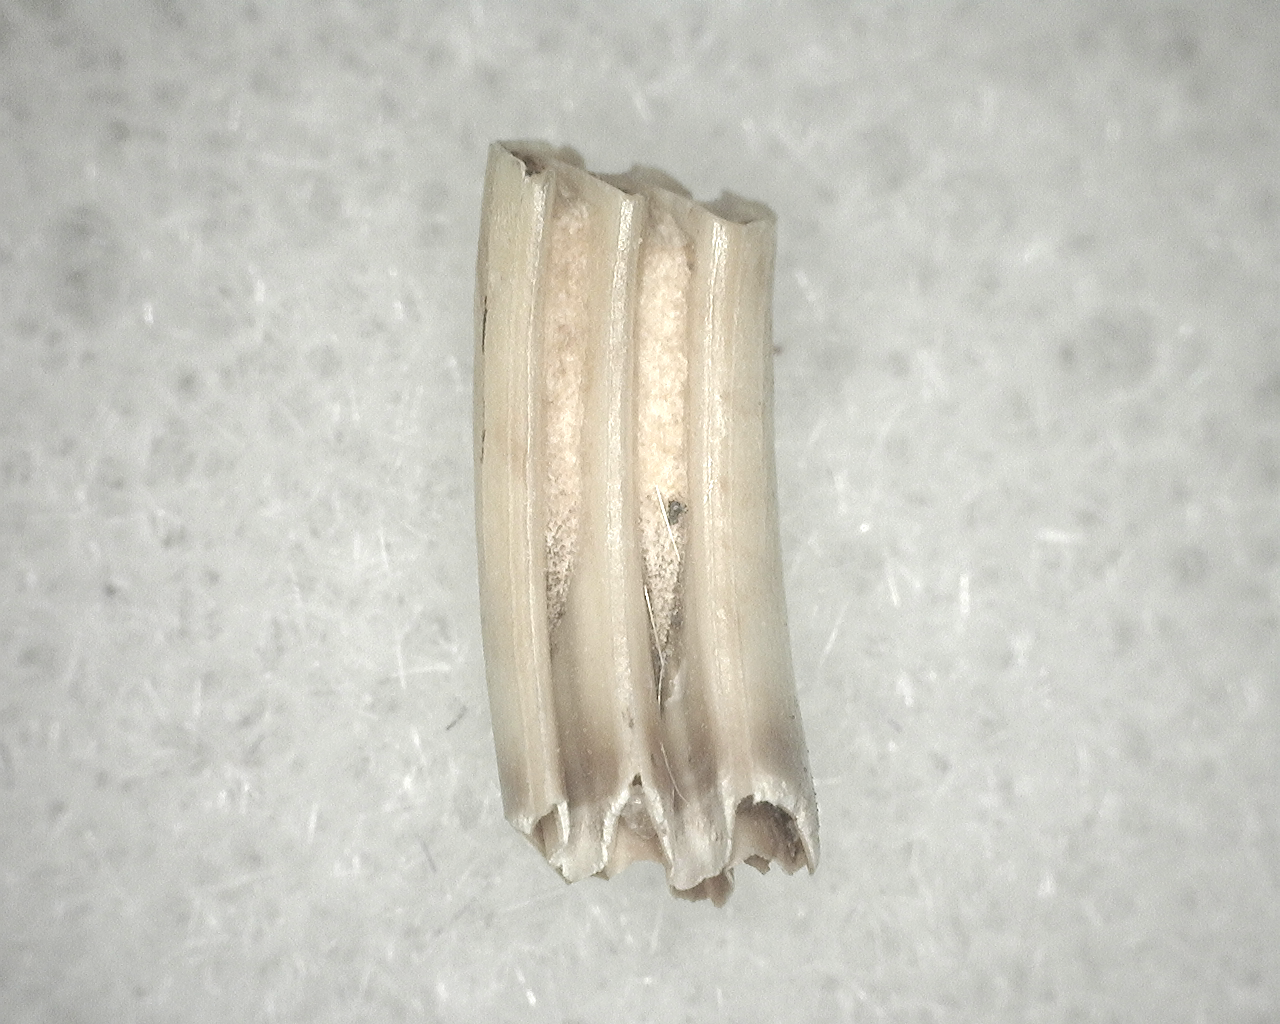 Genuine Fossil Pleistocene Neofiber Muskrat Tooth for Sale From Florida #12b